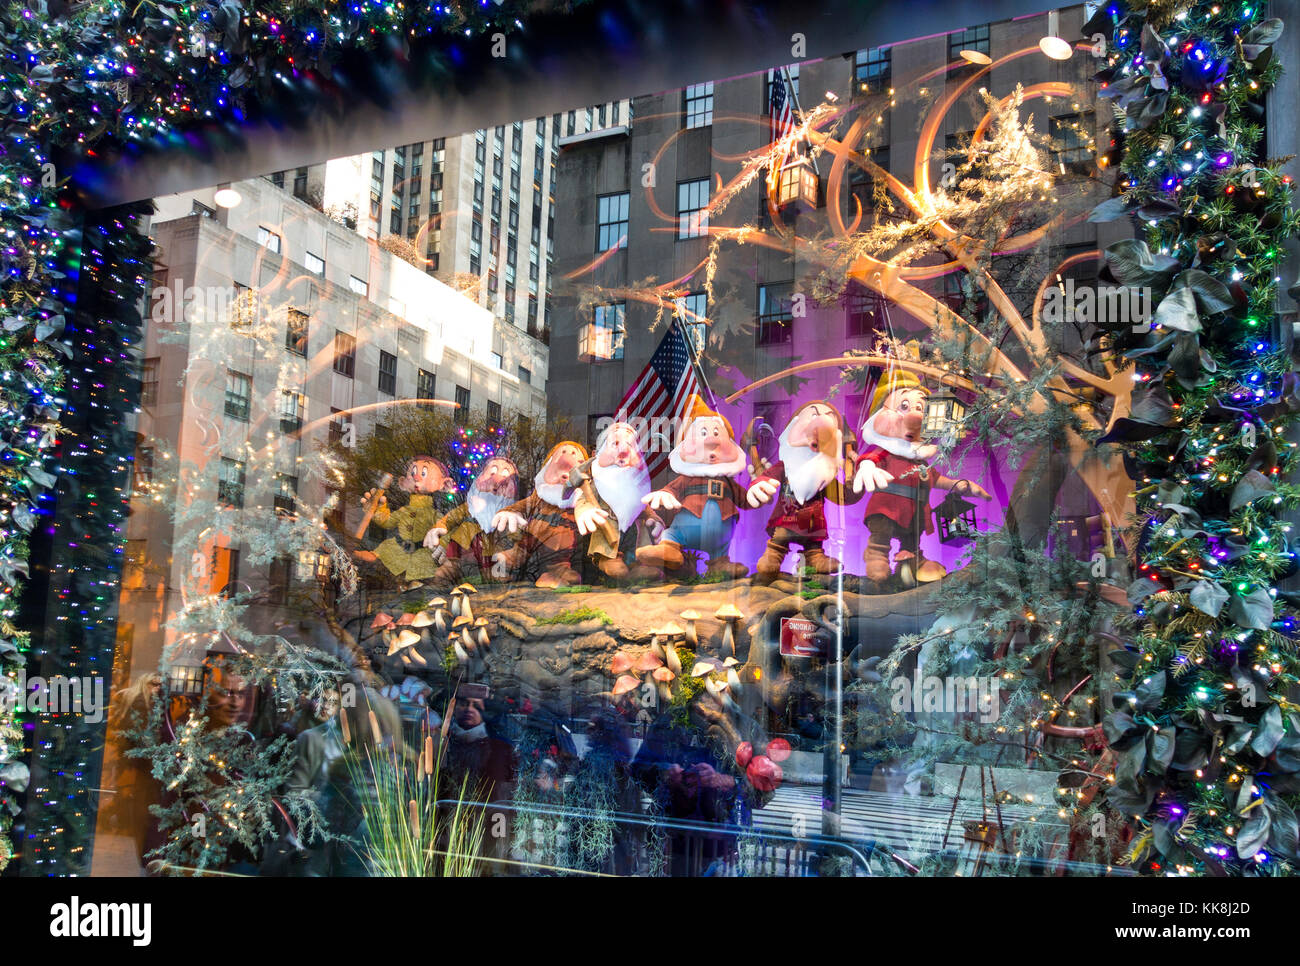 File:Saks Fifth Avenue Christmas Light Show Snowstorm 2020  (50732619583).jpg - Wikimedia Commons